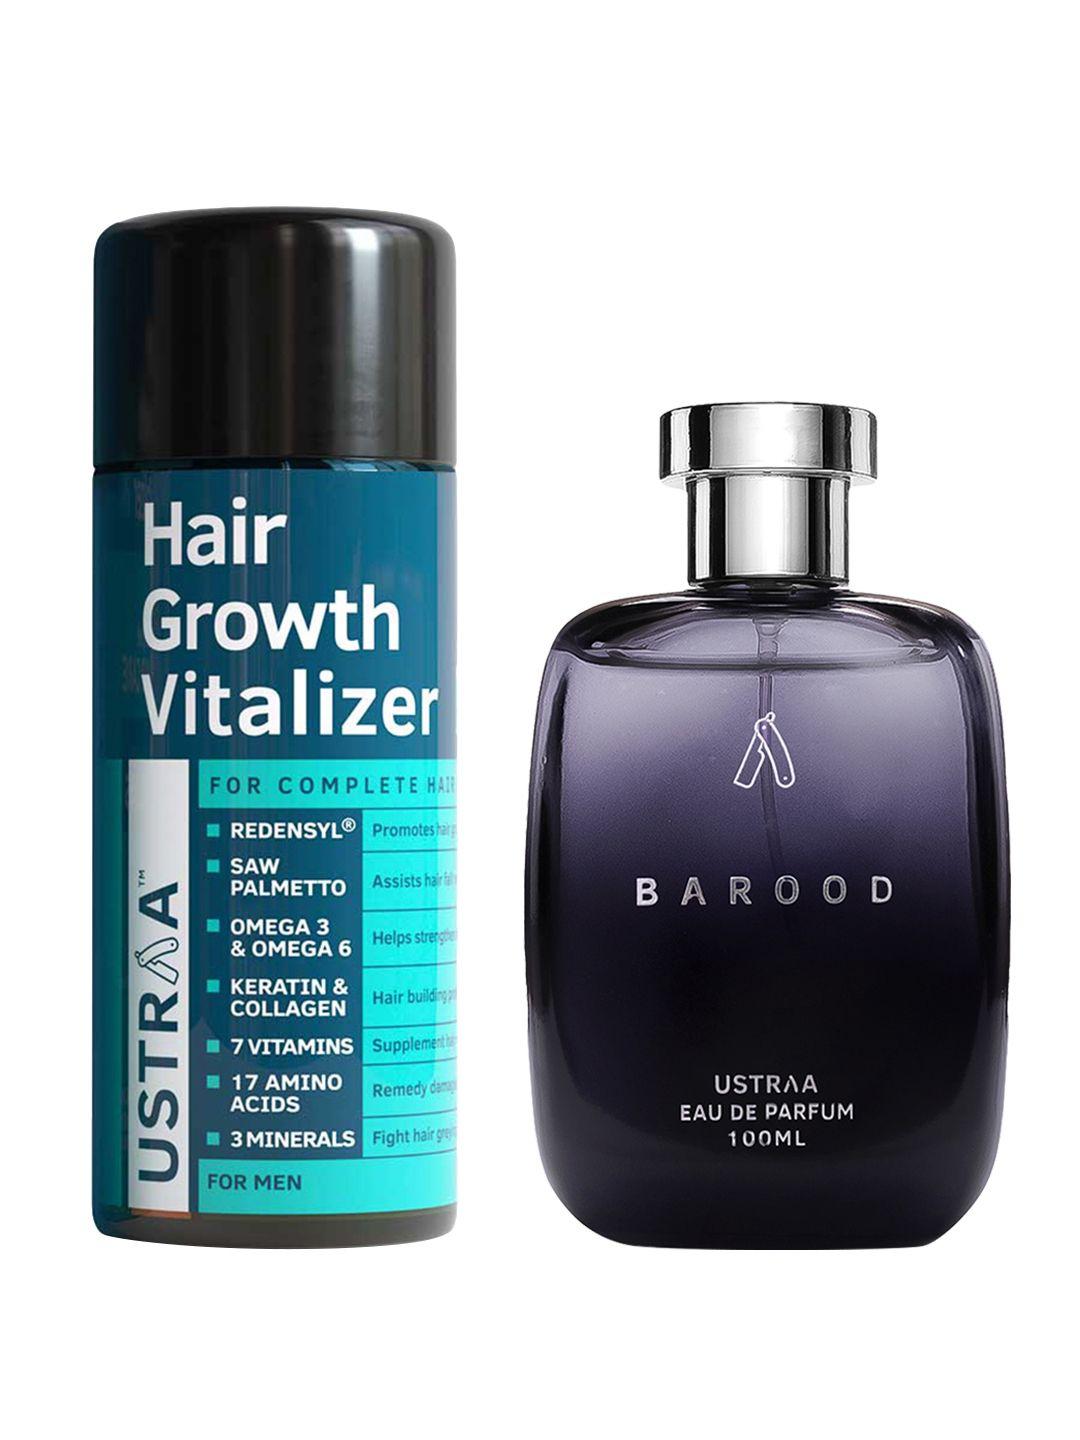 ustraa men set of hair growth vitalizer 100 ml + barood eau de parfum 100 ml